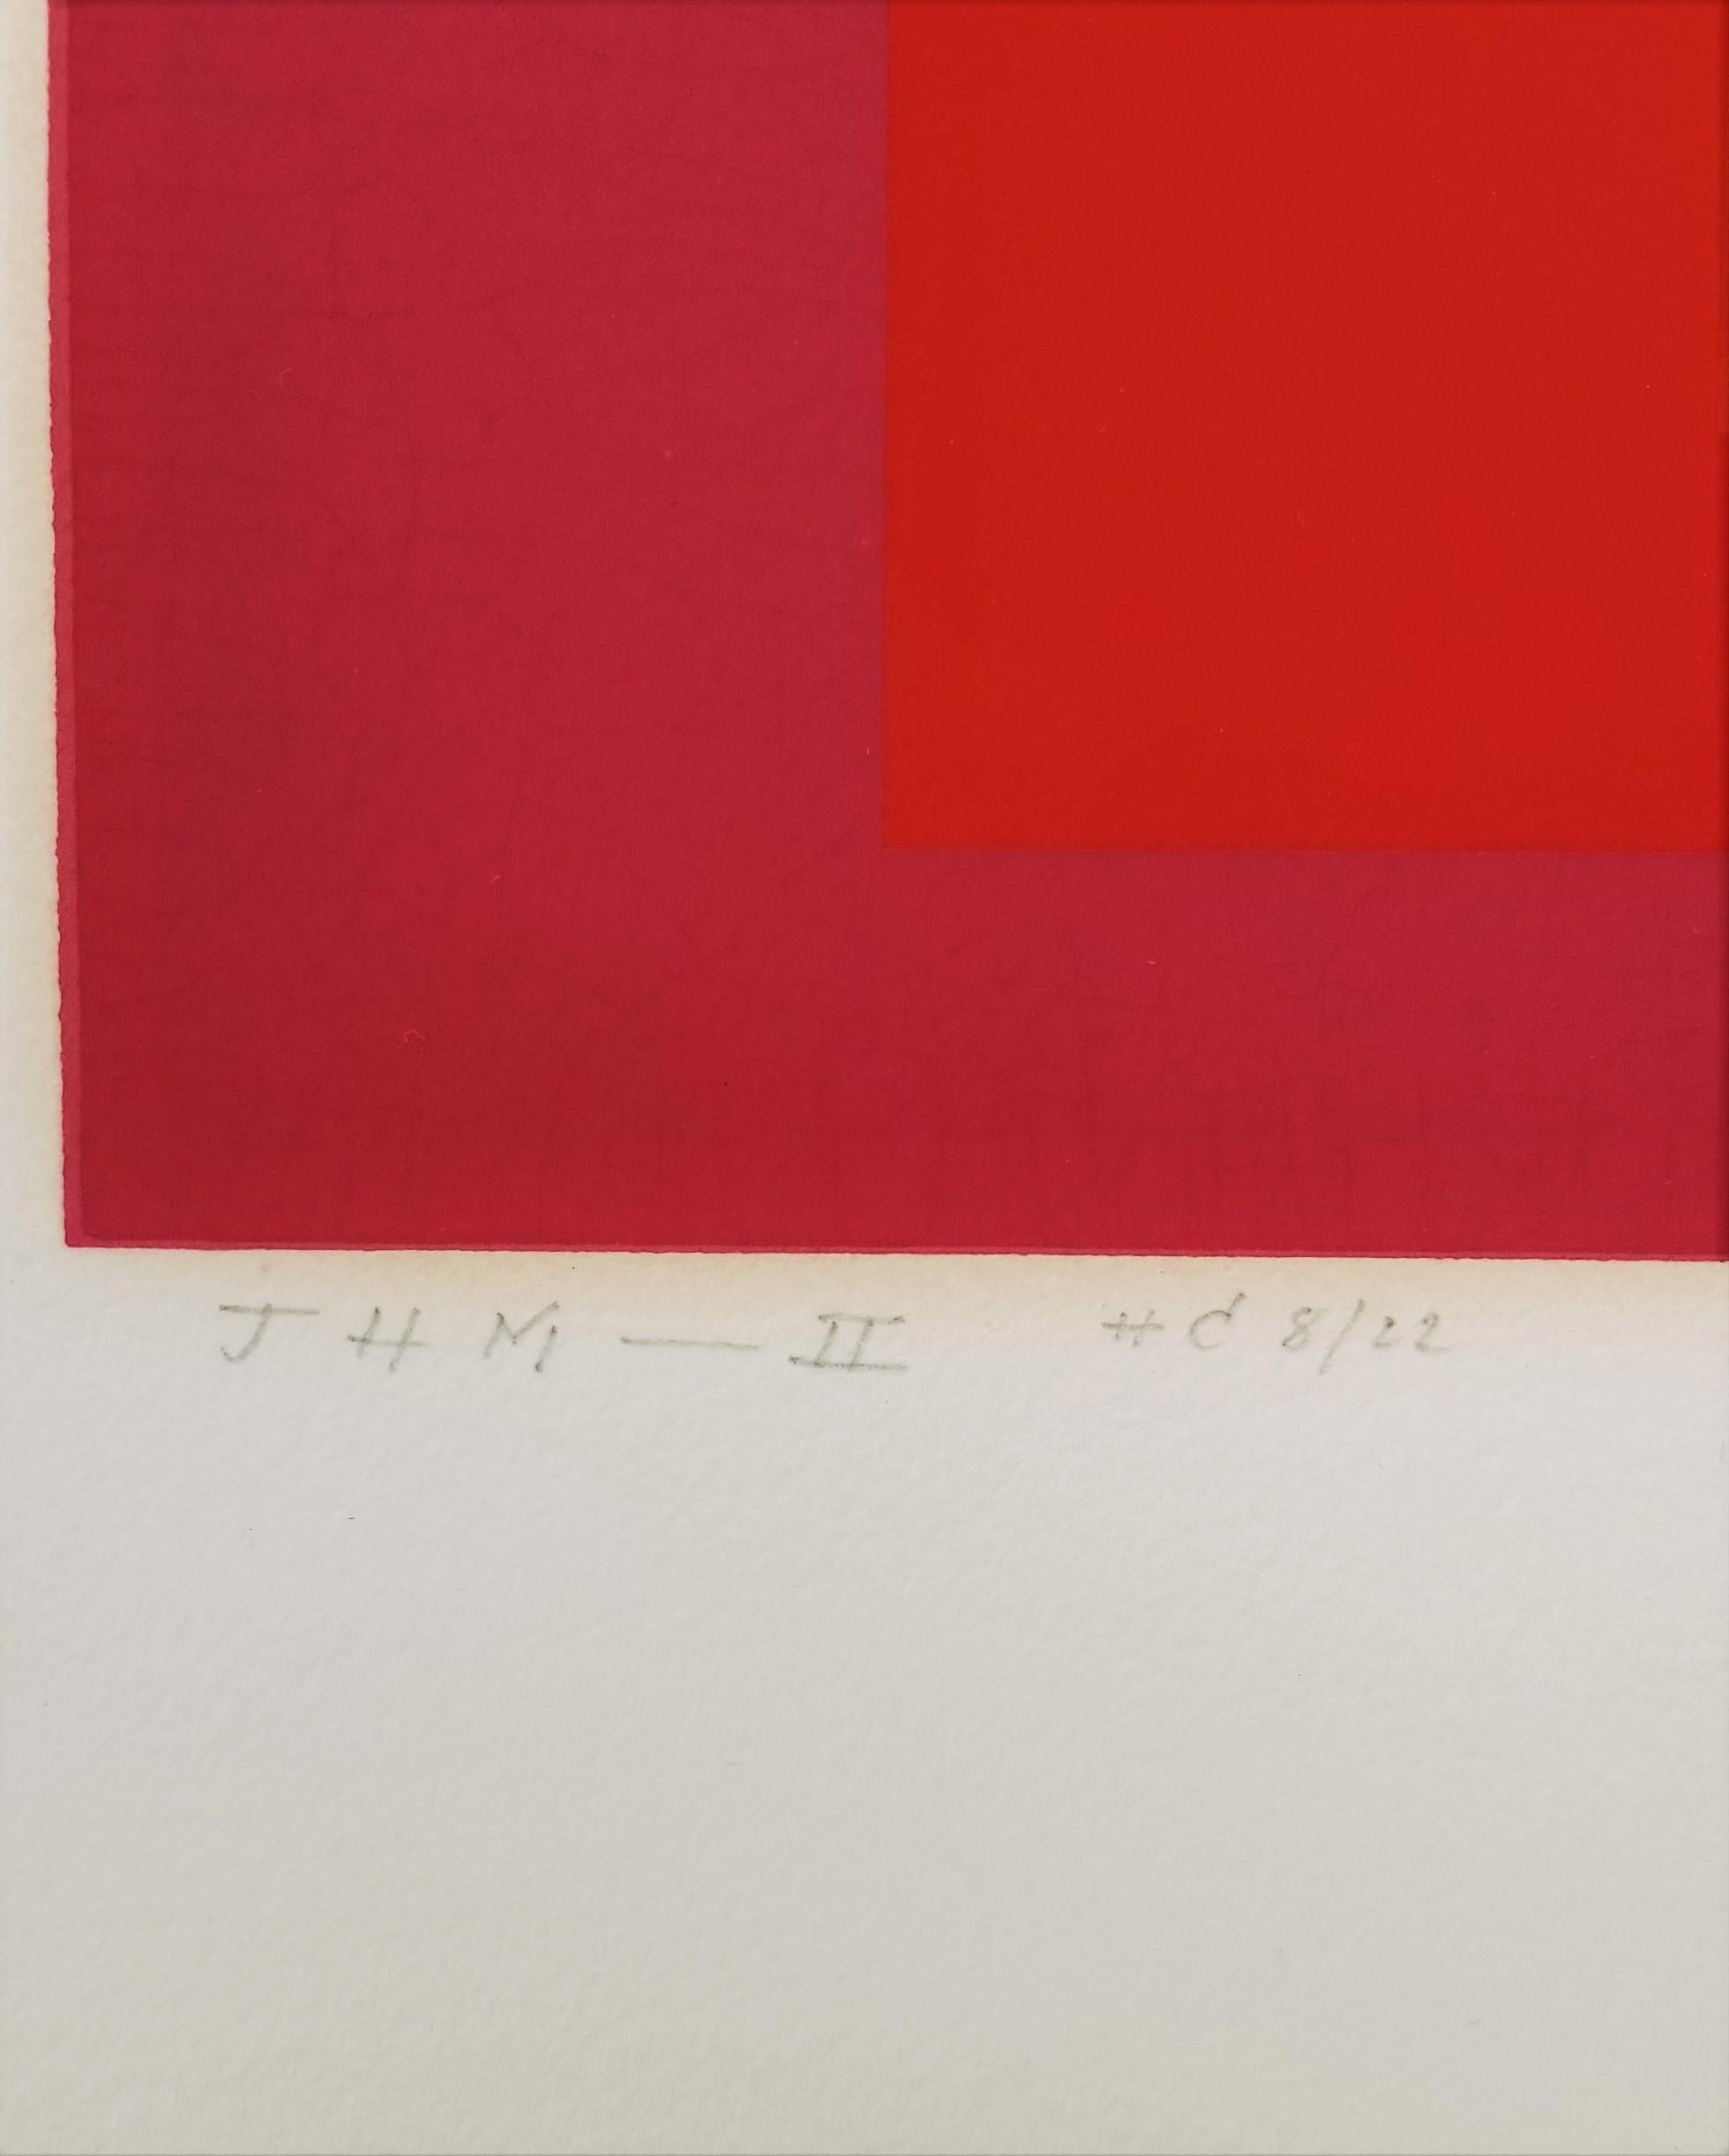 JHM - II /// Bauhaus Abstract Geometric Josef Albers Screenprint Minimalism For Sale 1